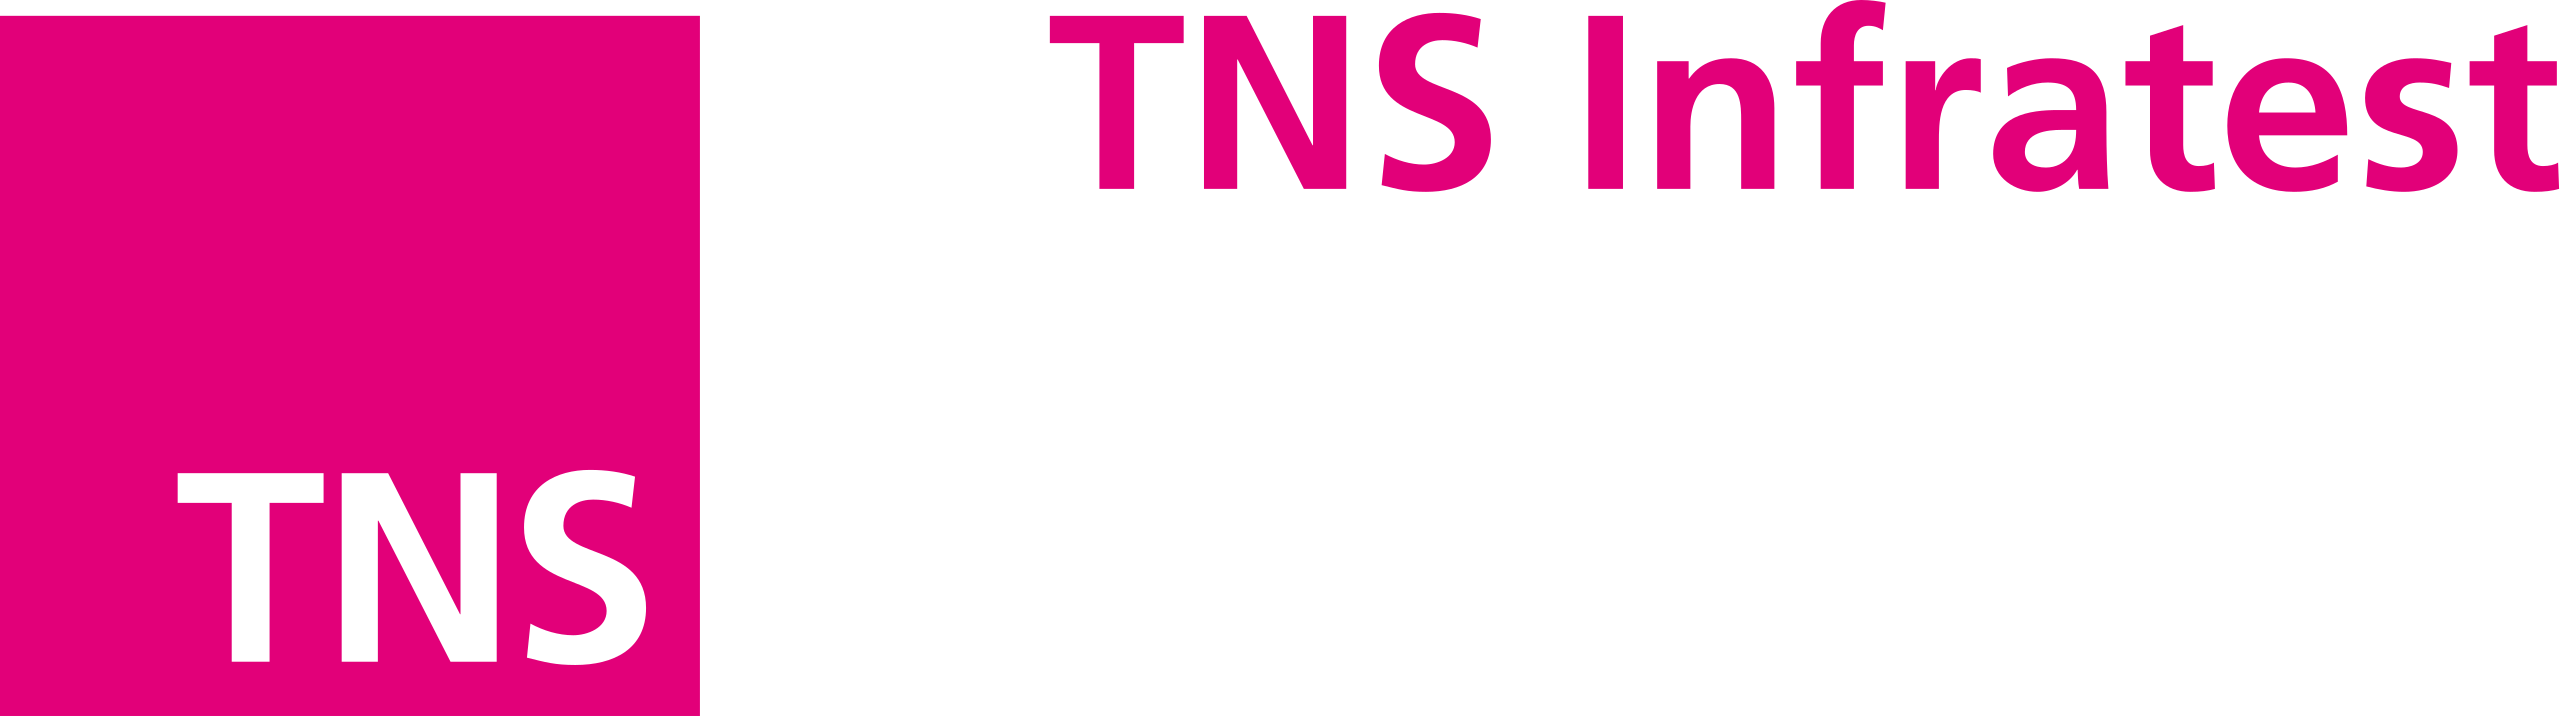 Logo TNS Infratest